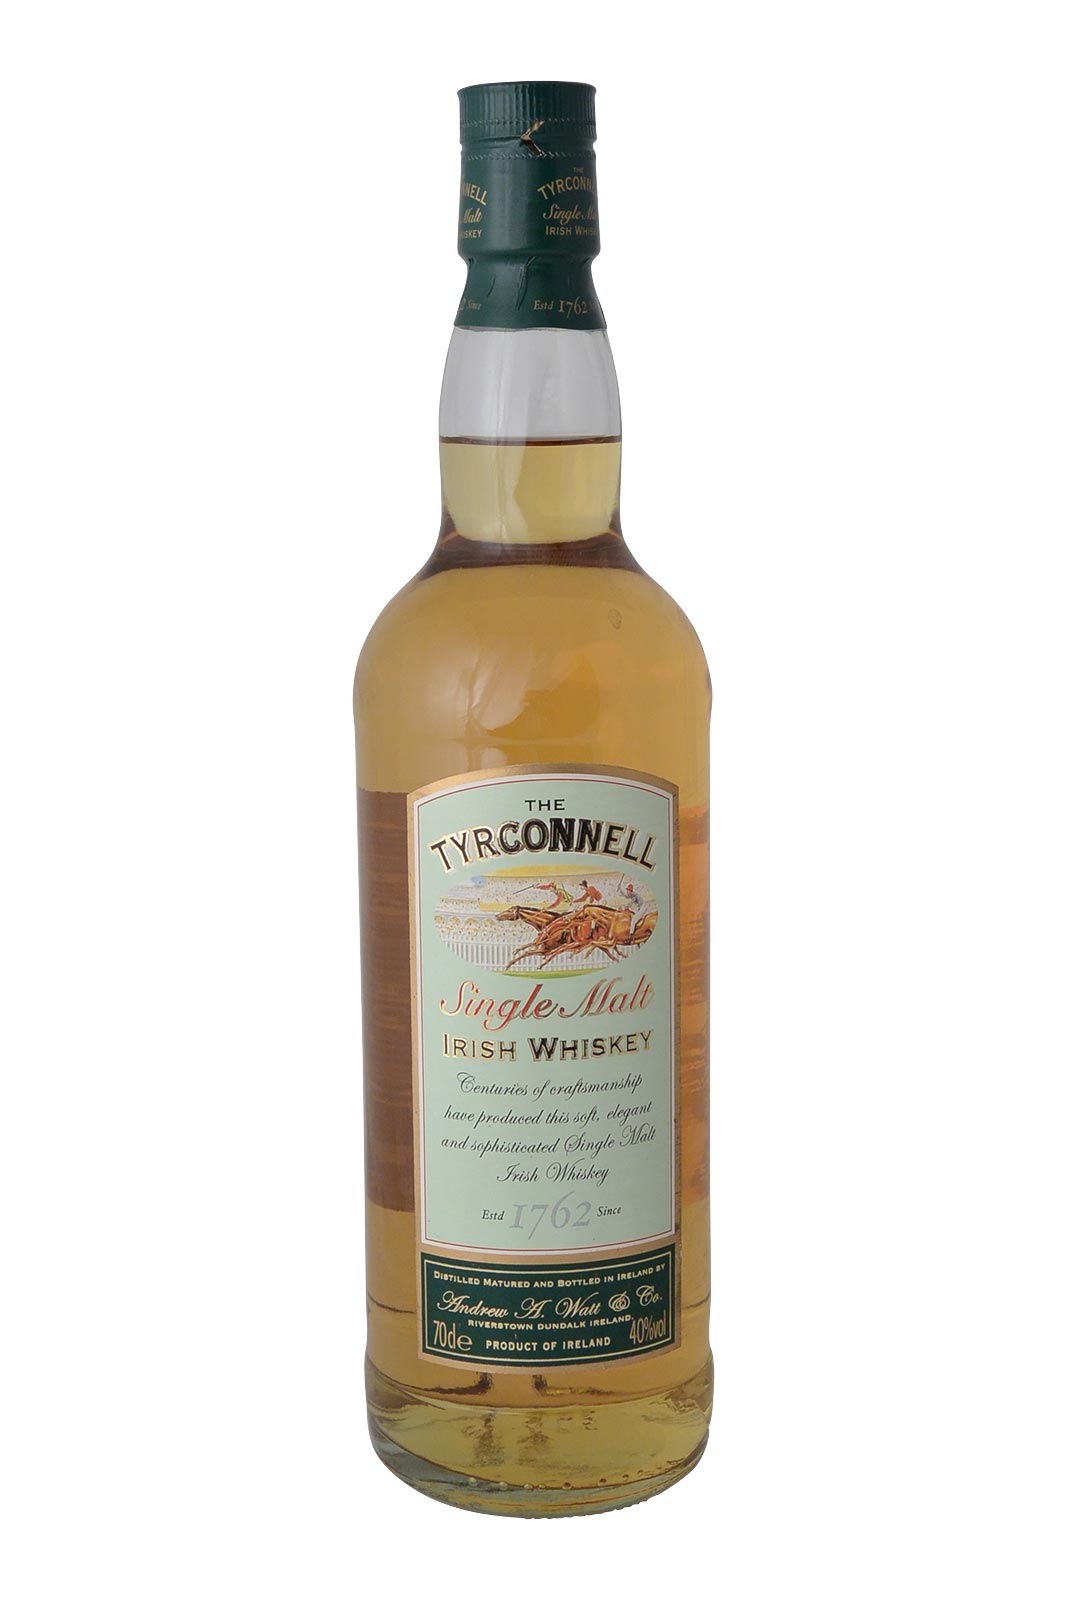 Whisky irlandais The Tyrconnell Single Malt